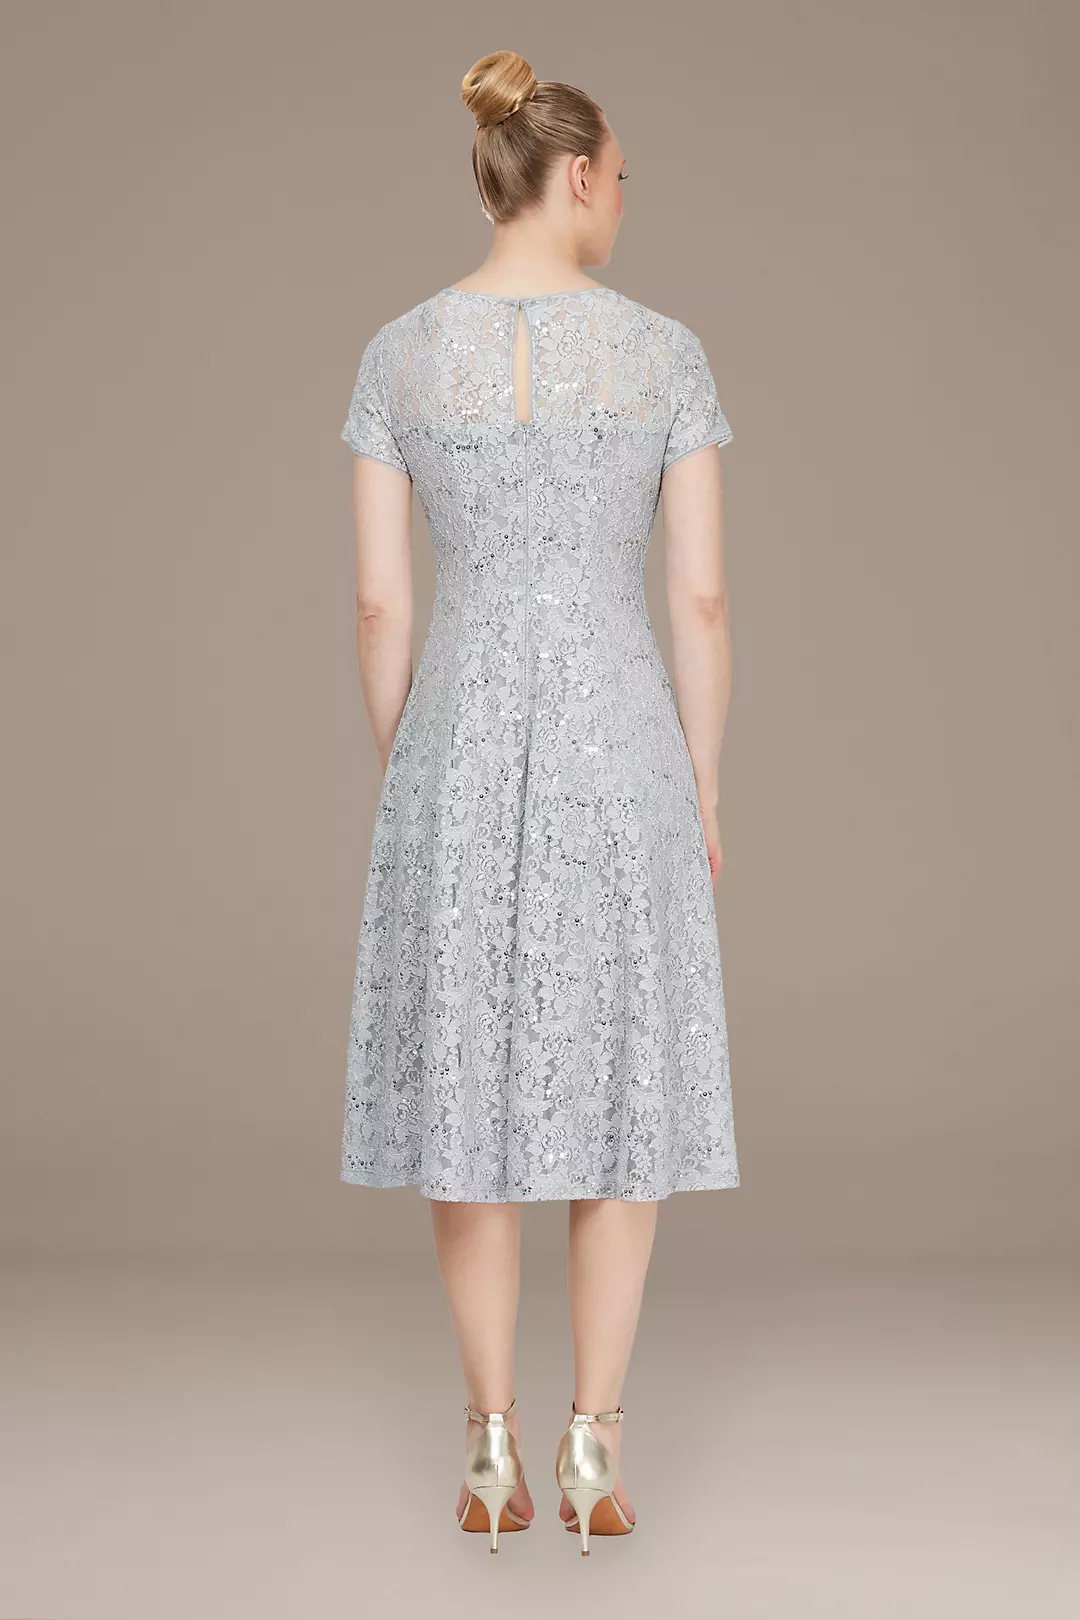 Sequin Lace Cap Sleeve Tea-Length Dress Image 2